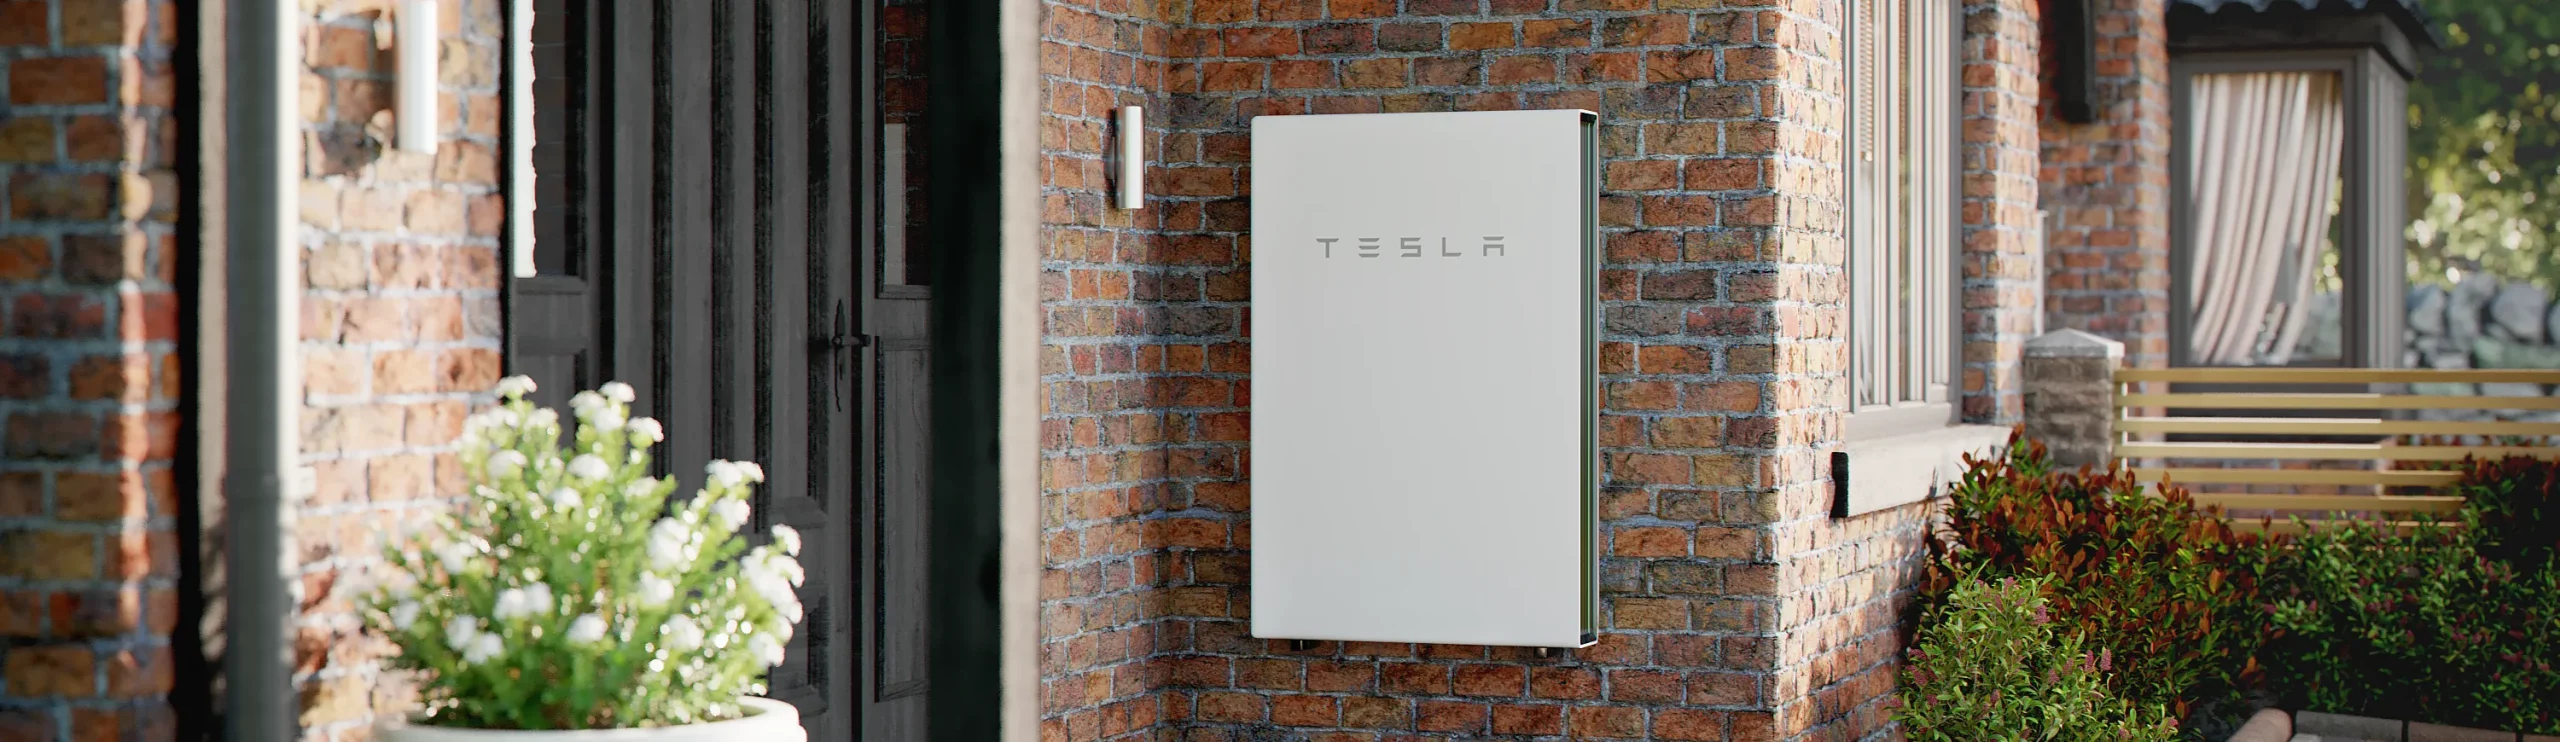 Tesla Powerwall Installed in Yorkshire